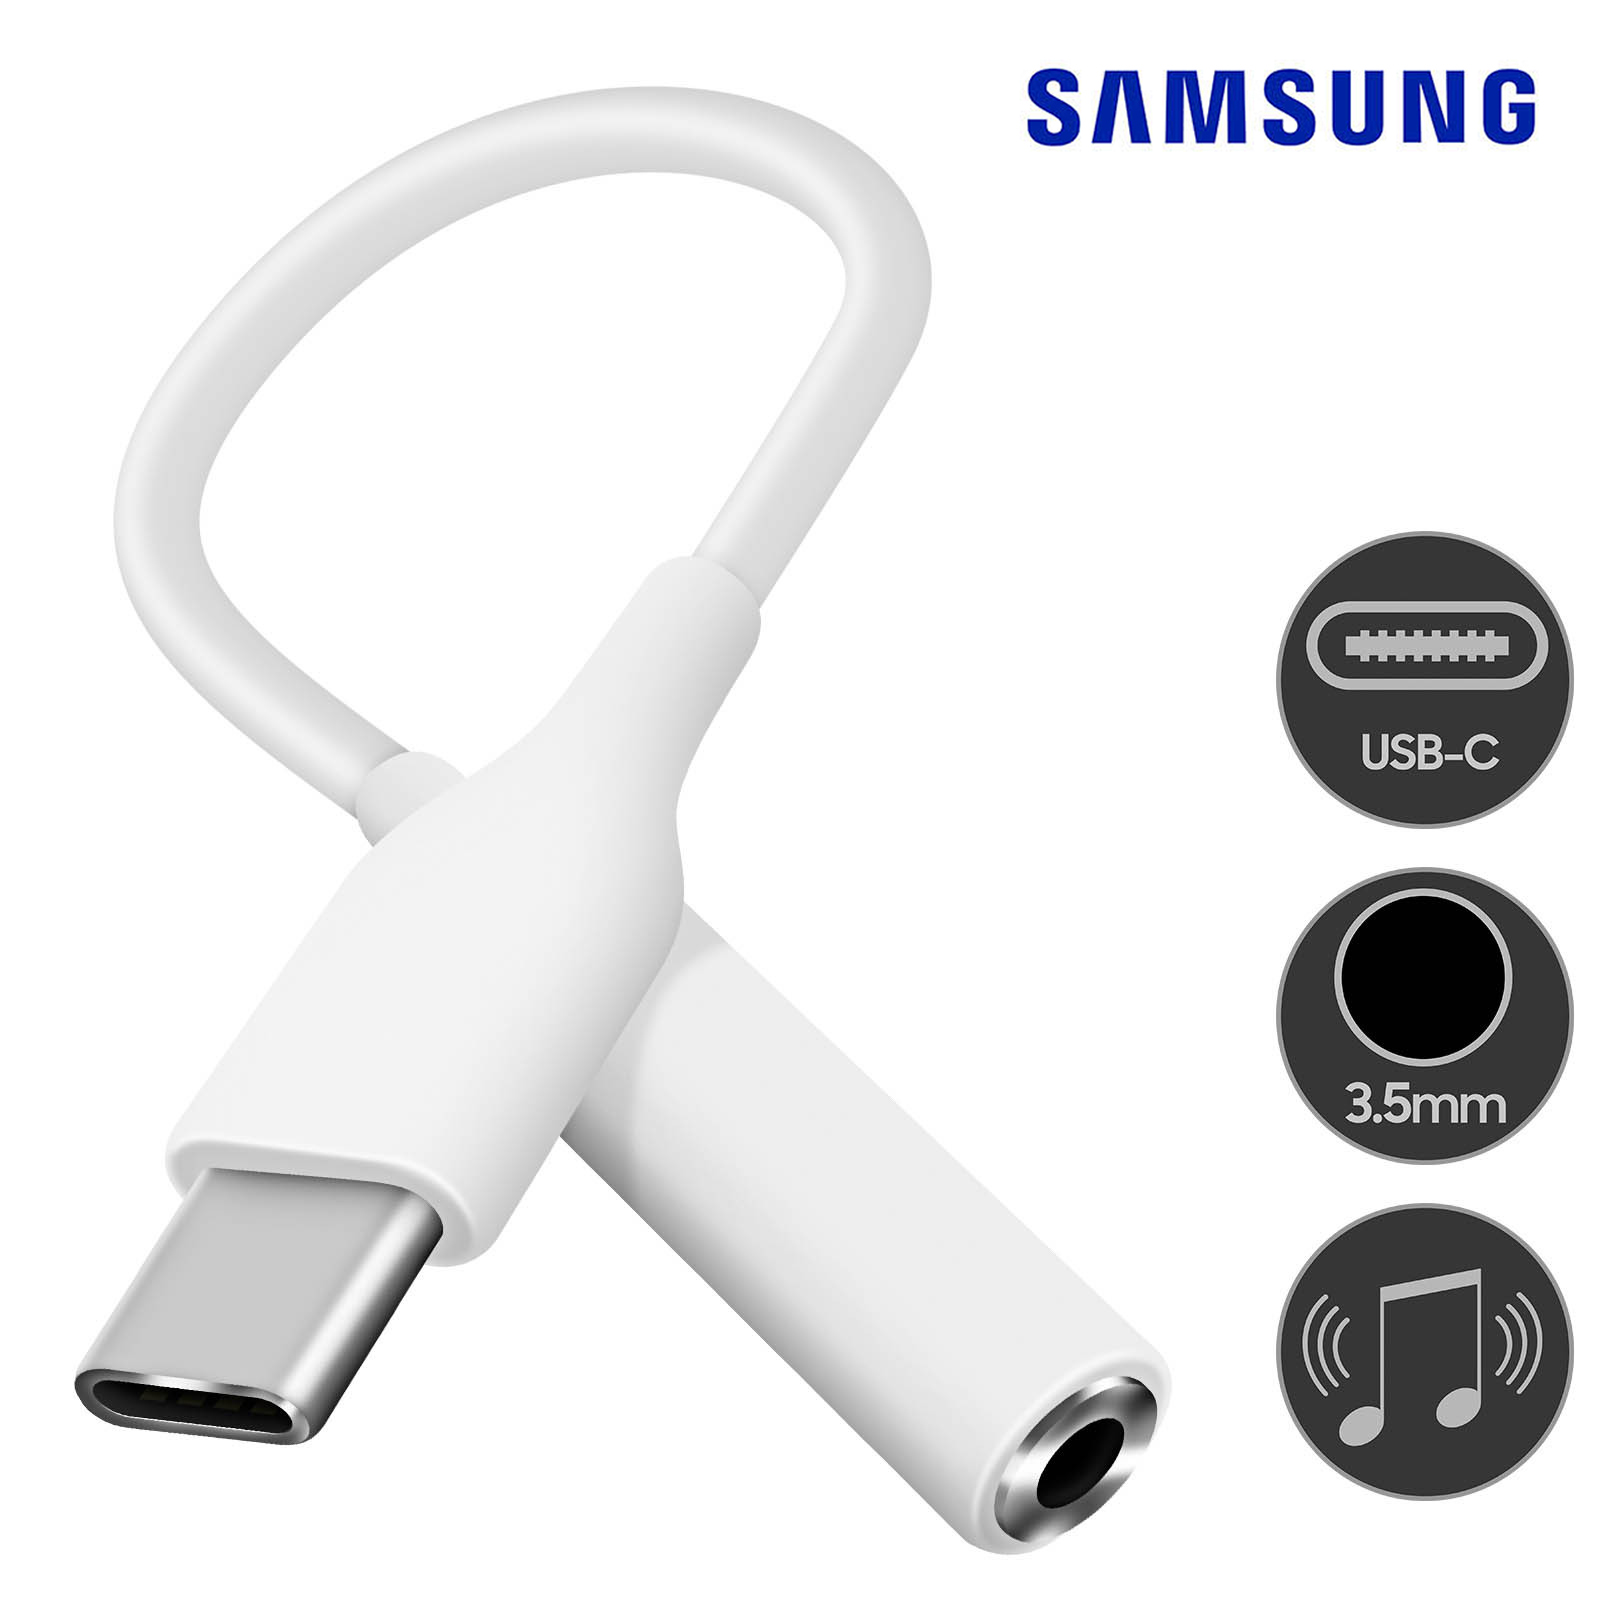 Adaptateur USB type C vers jack 3.5mm Samsung - Blanc